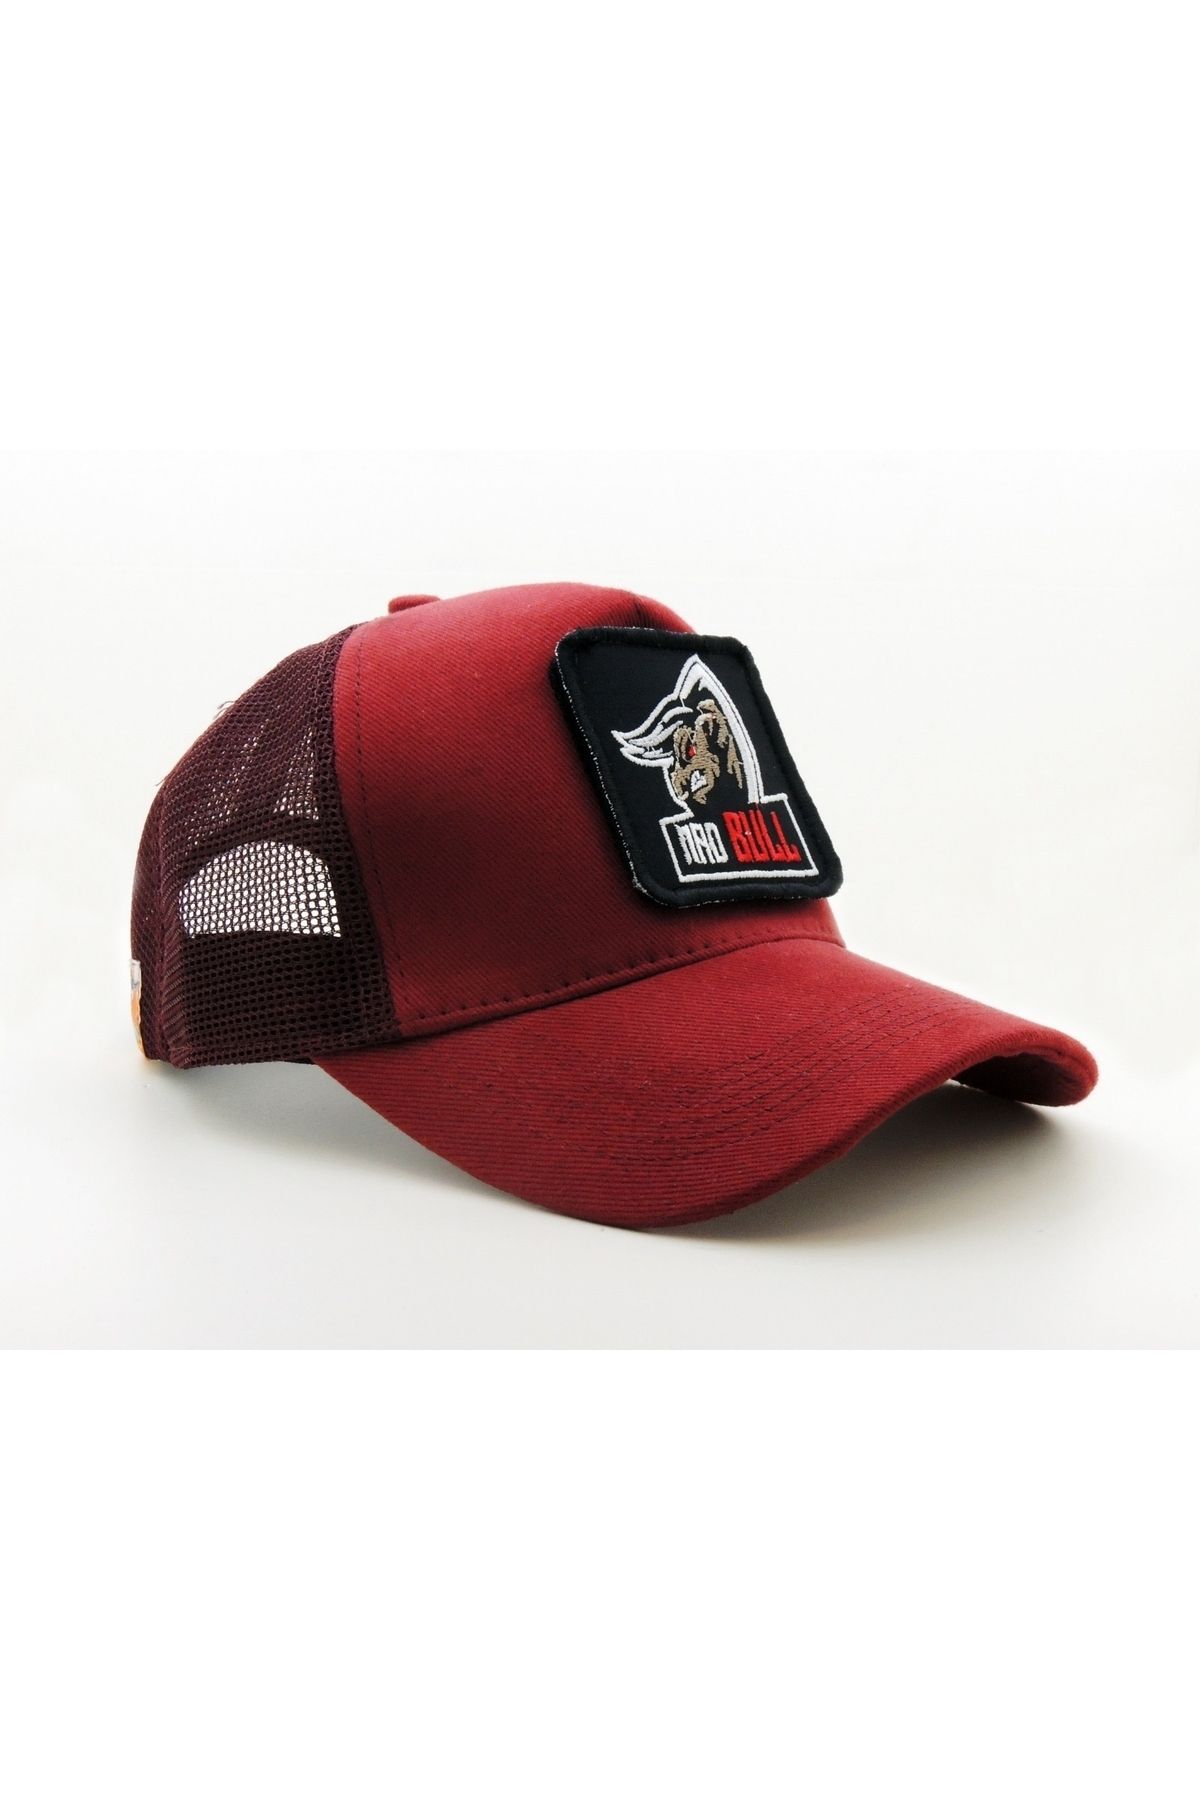 CityGoat Trucker (NAKIŞ) MAD BULL Logolu Unisex Bordo Şapka (CAP)